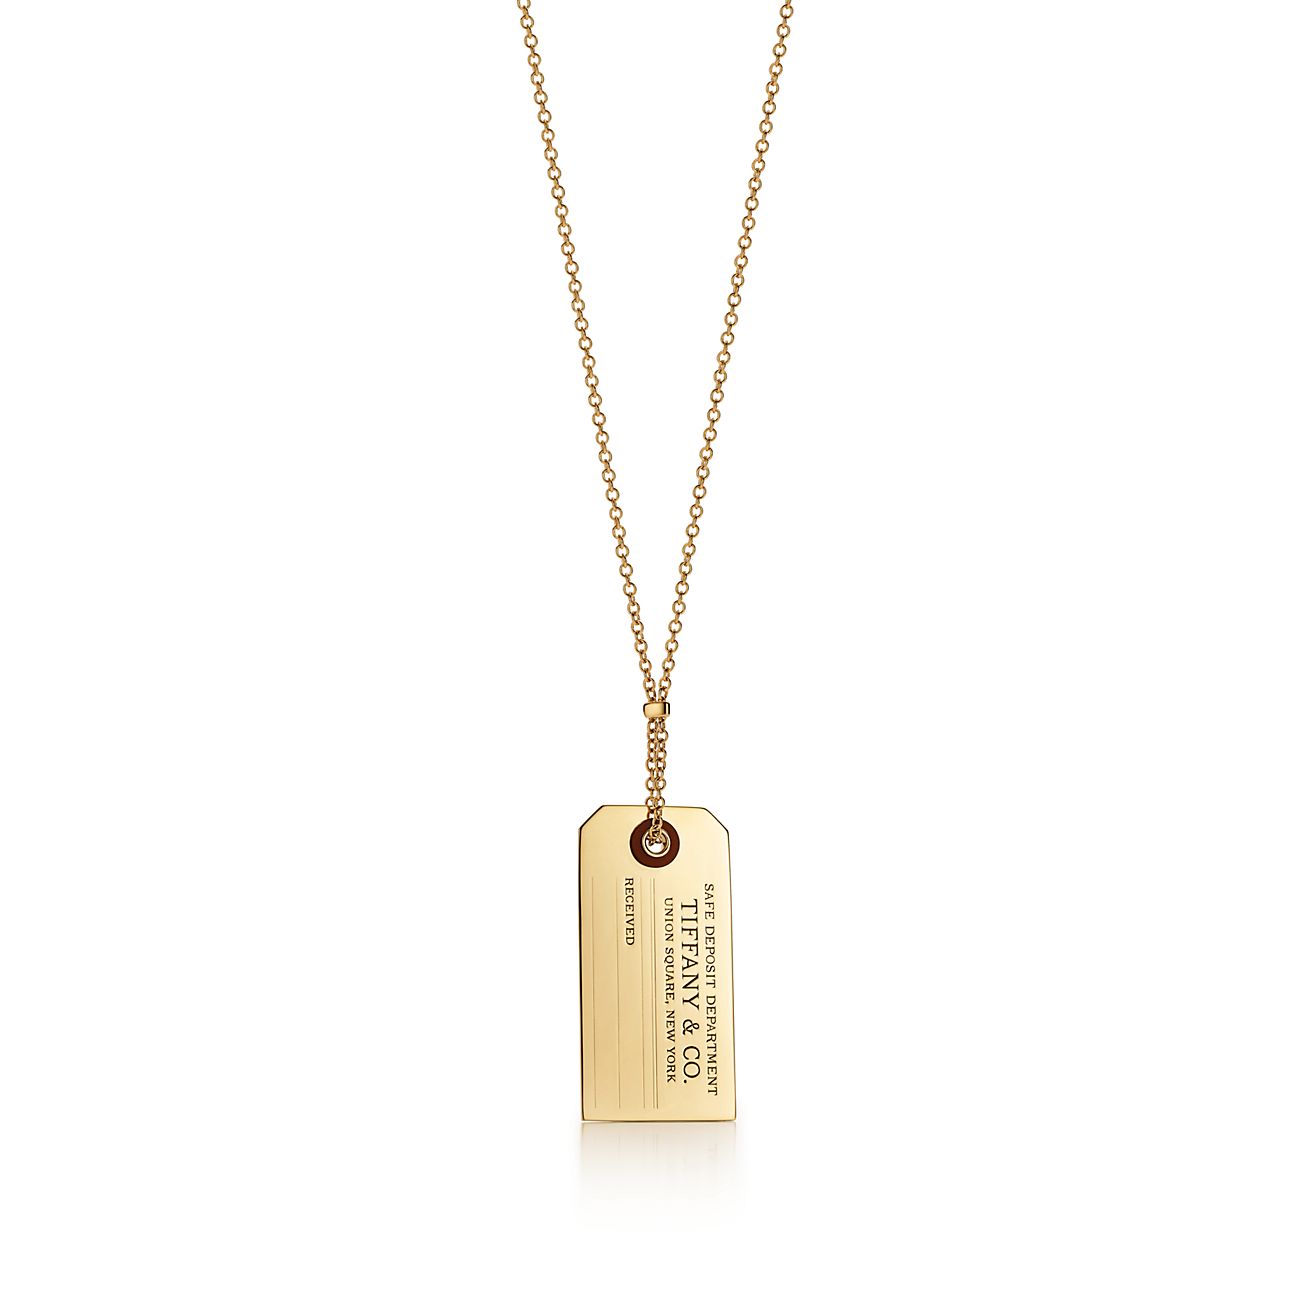 Tiffany Charms price tag pendant in 18k 